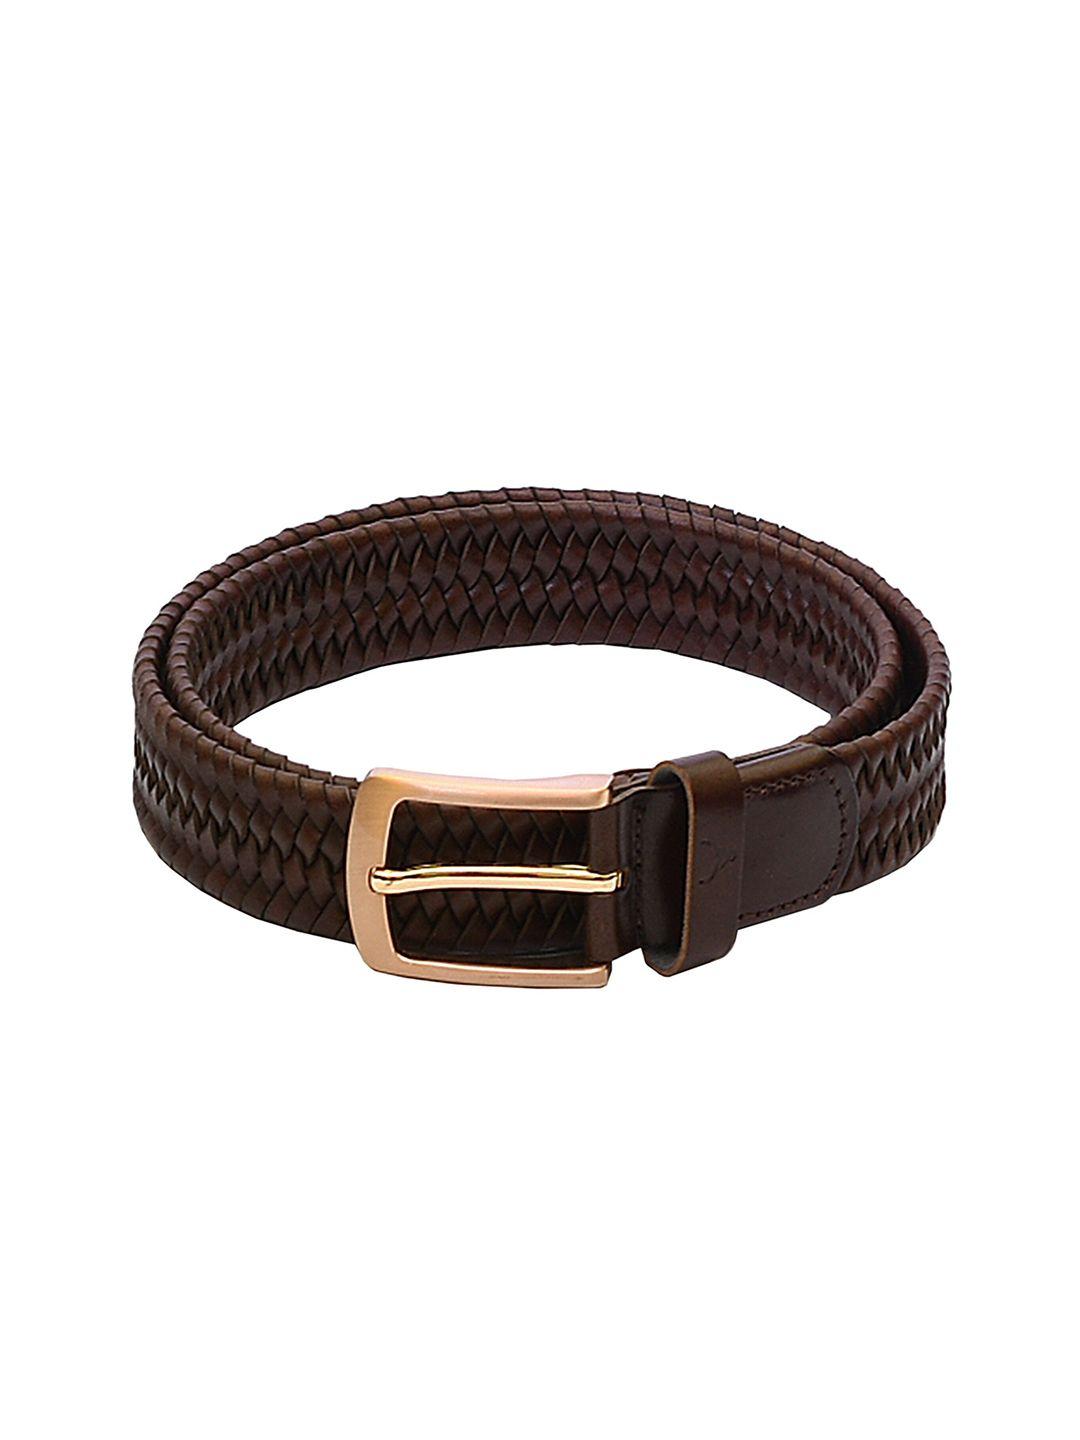 redhorns men braided leather belt